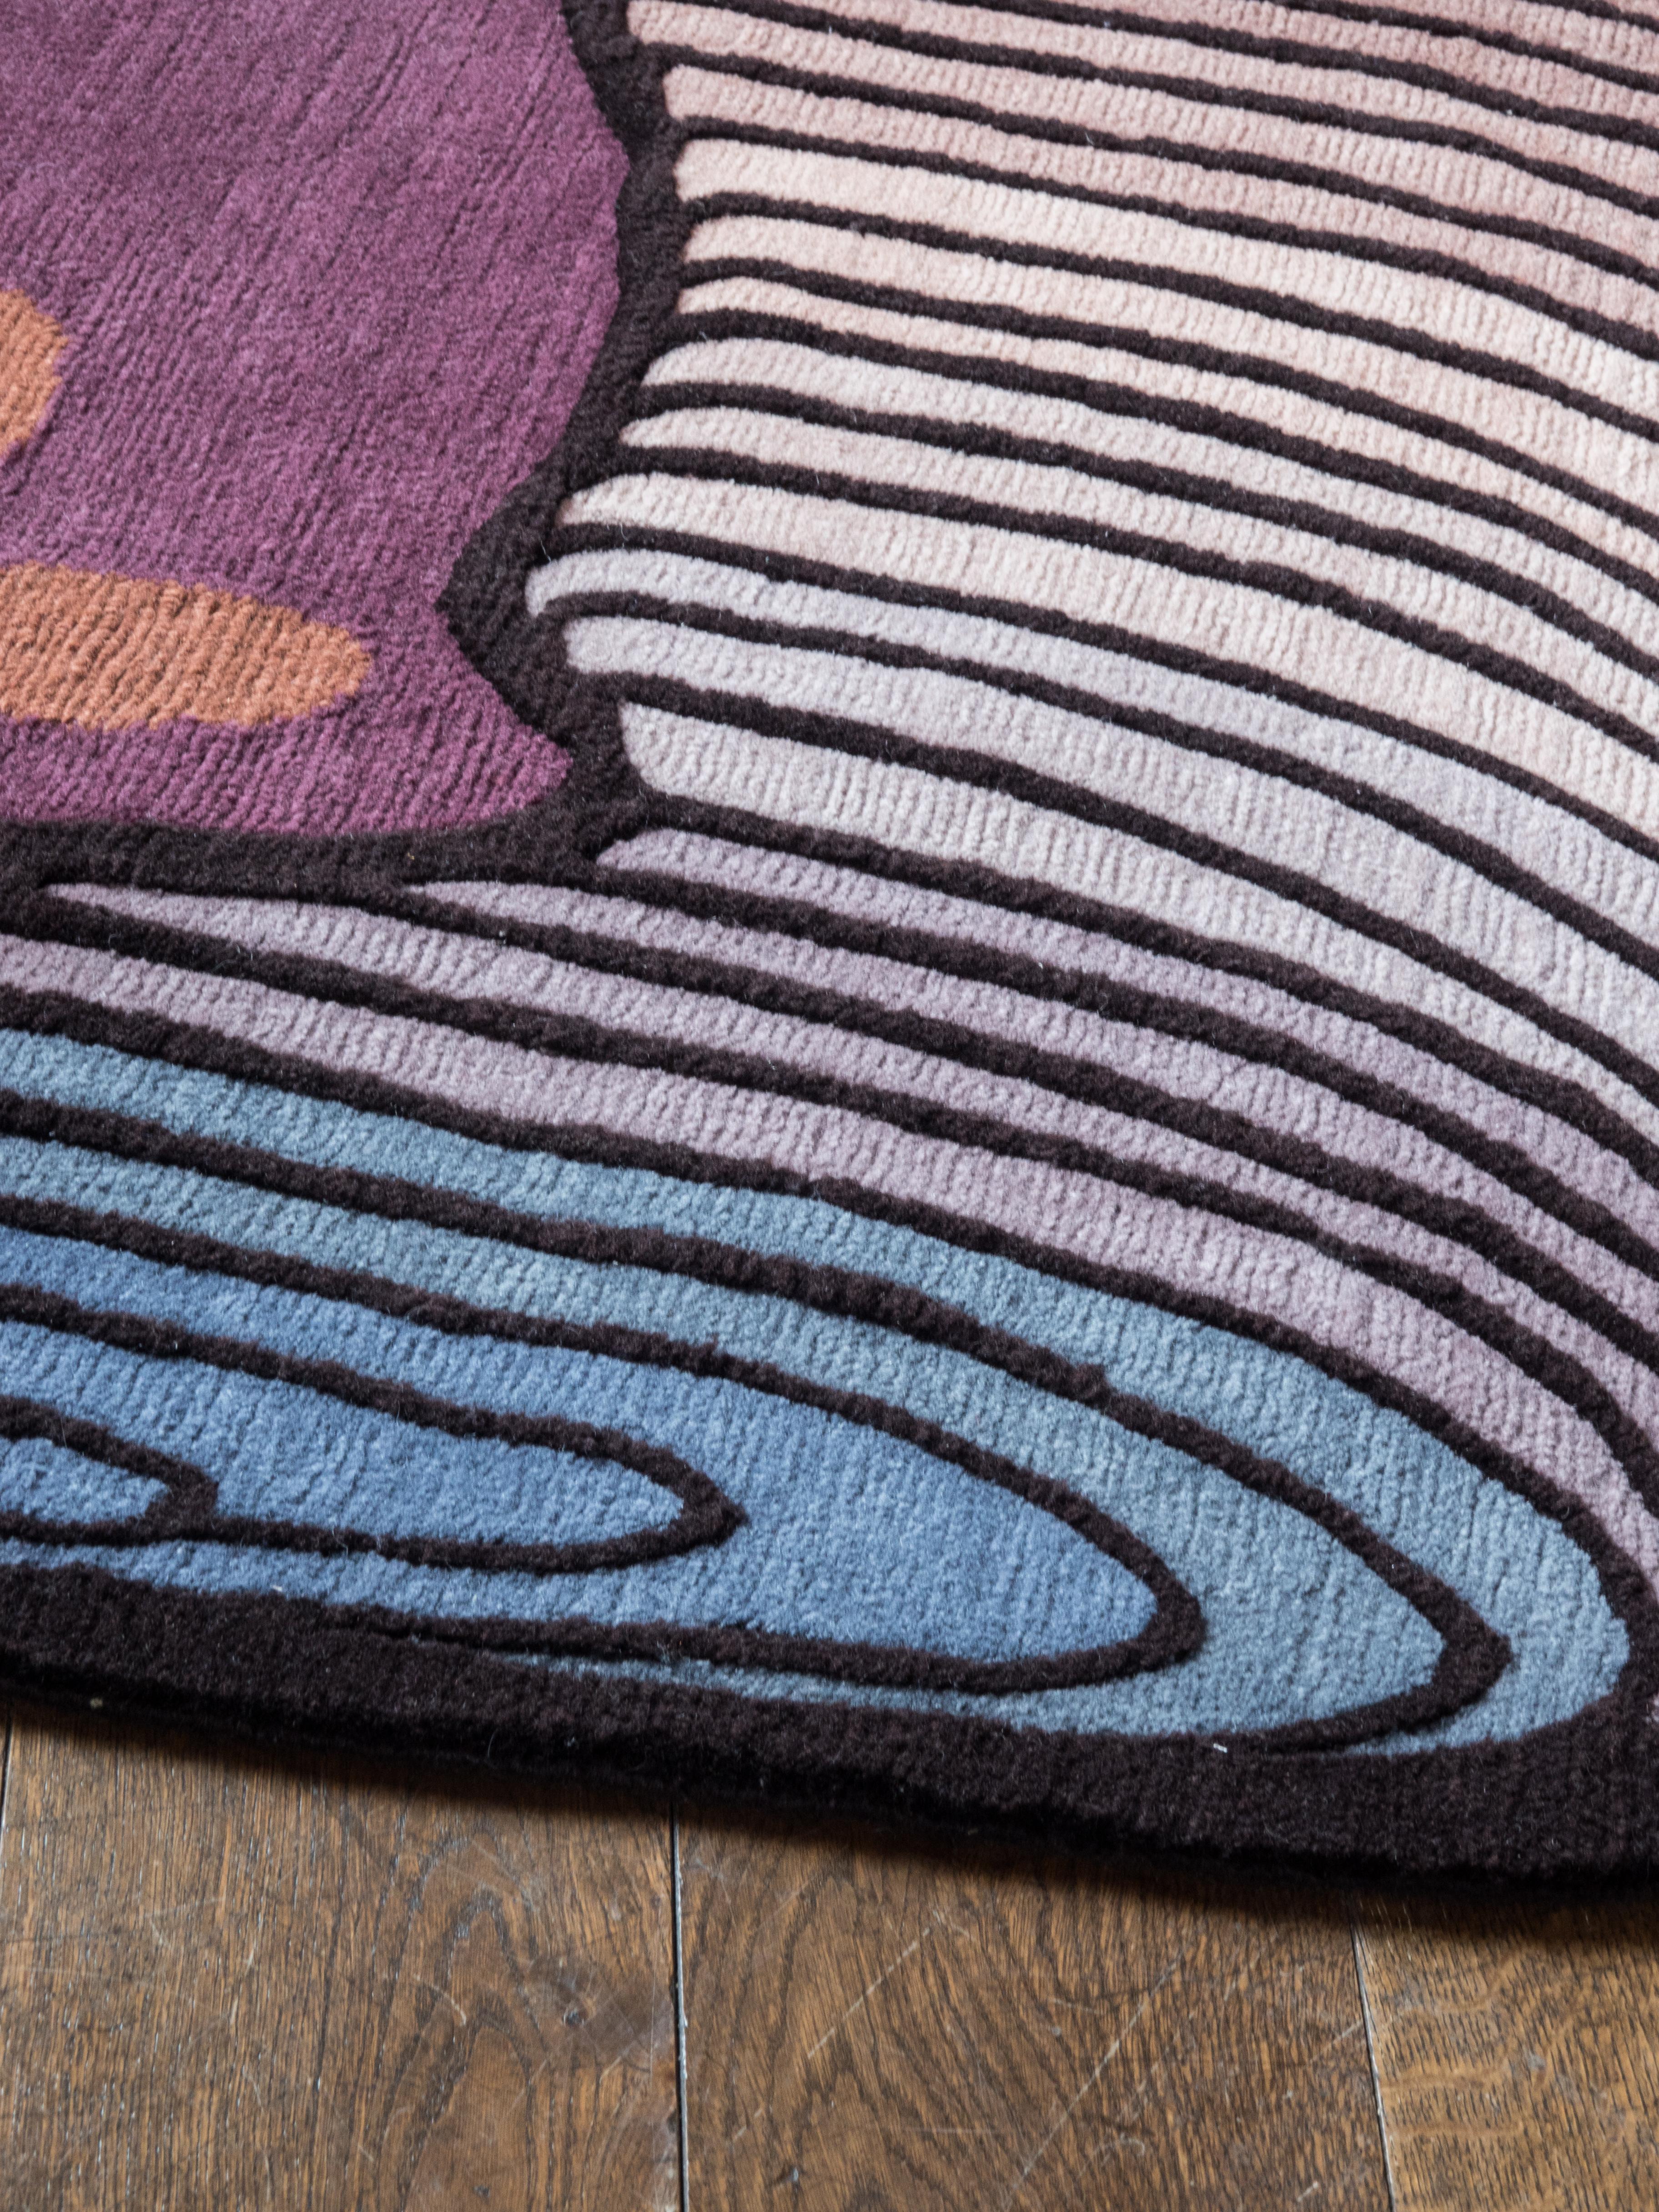 Nepalese Modern colofrul unusual rug Multicolored Irregular shape, Gamma Sud small For Sale